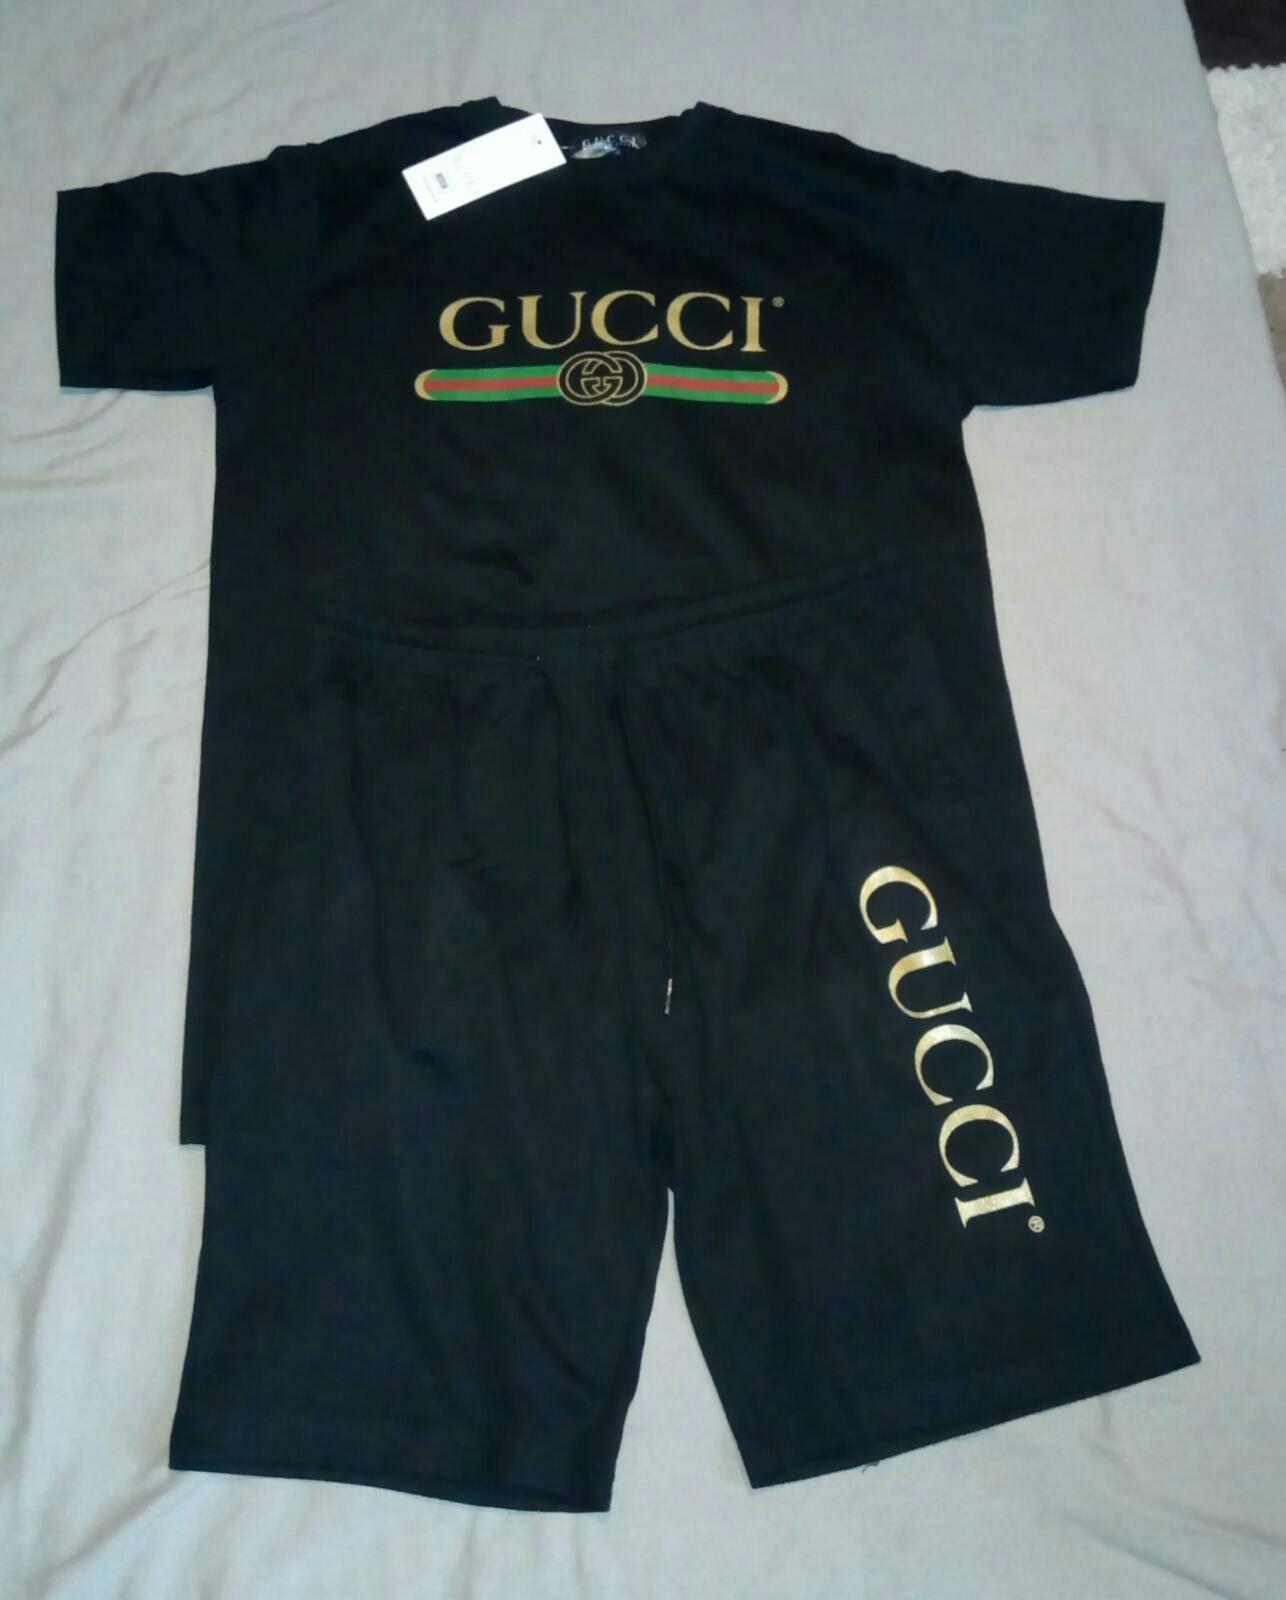 Gucci Clothes For Roblox Buyudum Cocuk Oldum - boy shirts roblox codes rldm